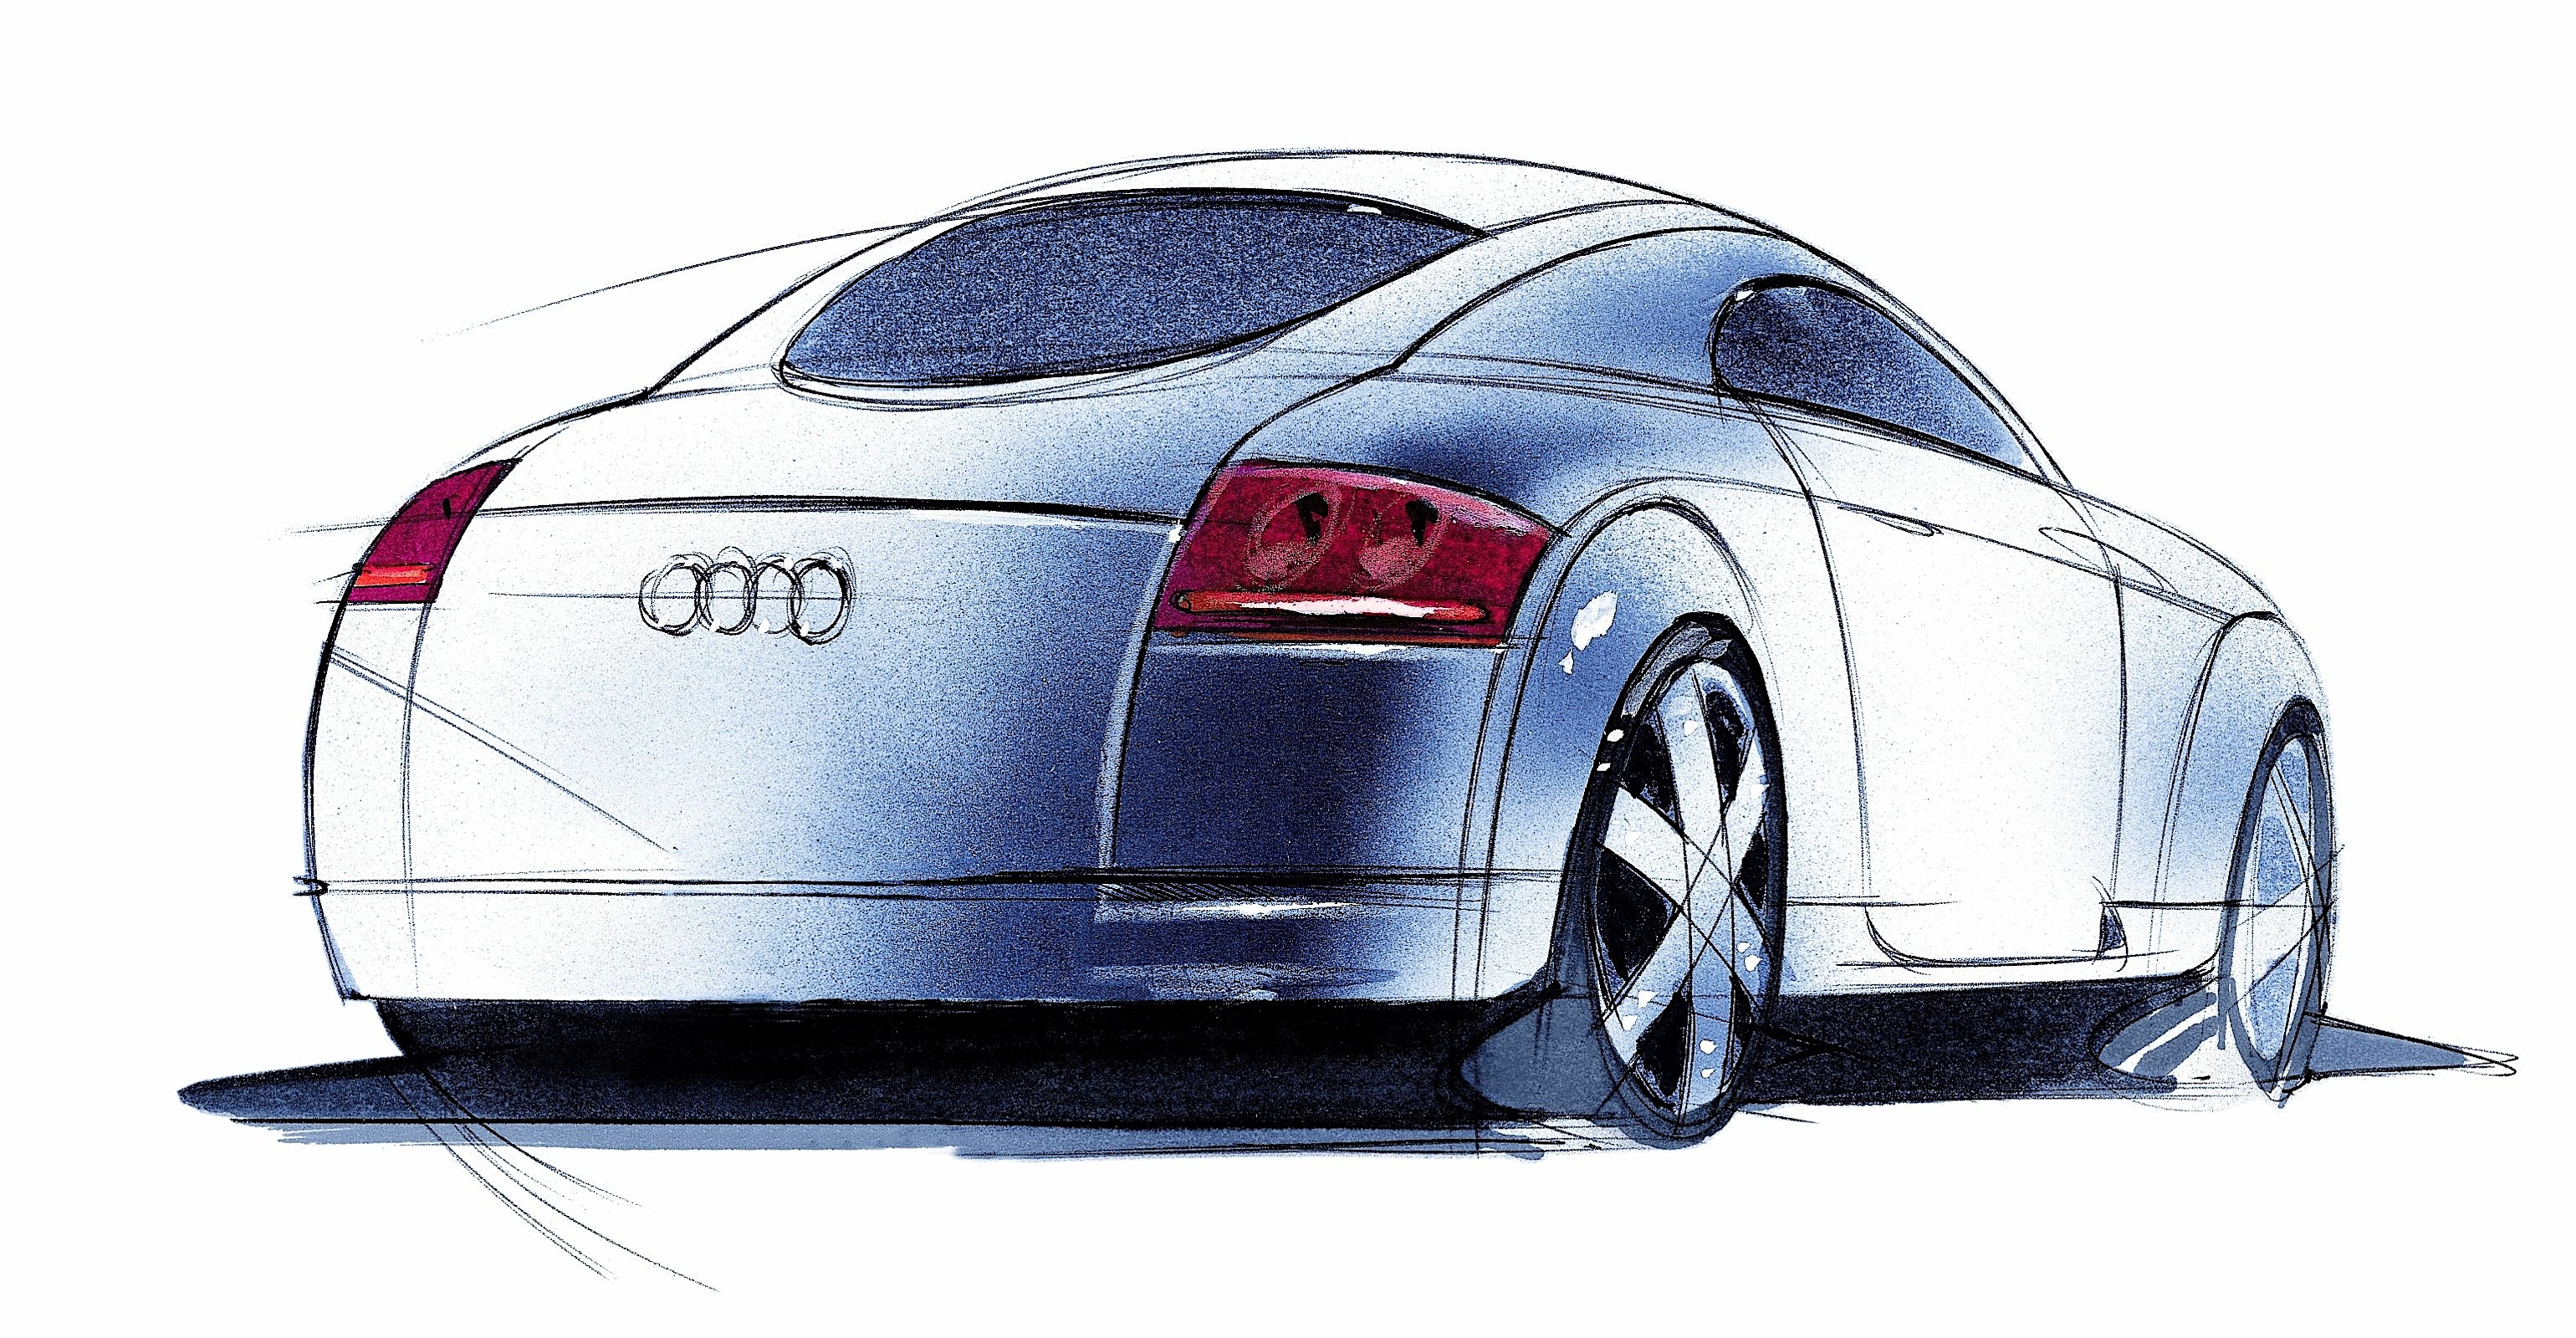 Audi TT Designer Recalls Collaboration with Engineers